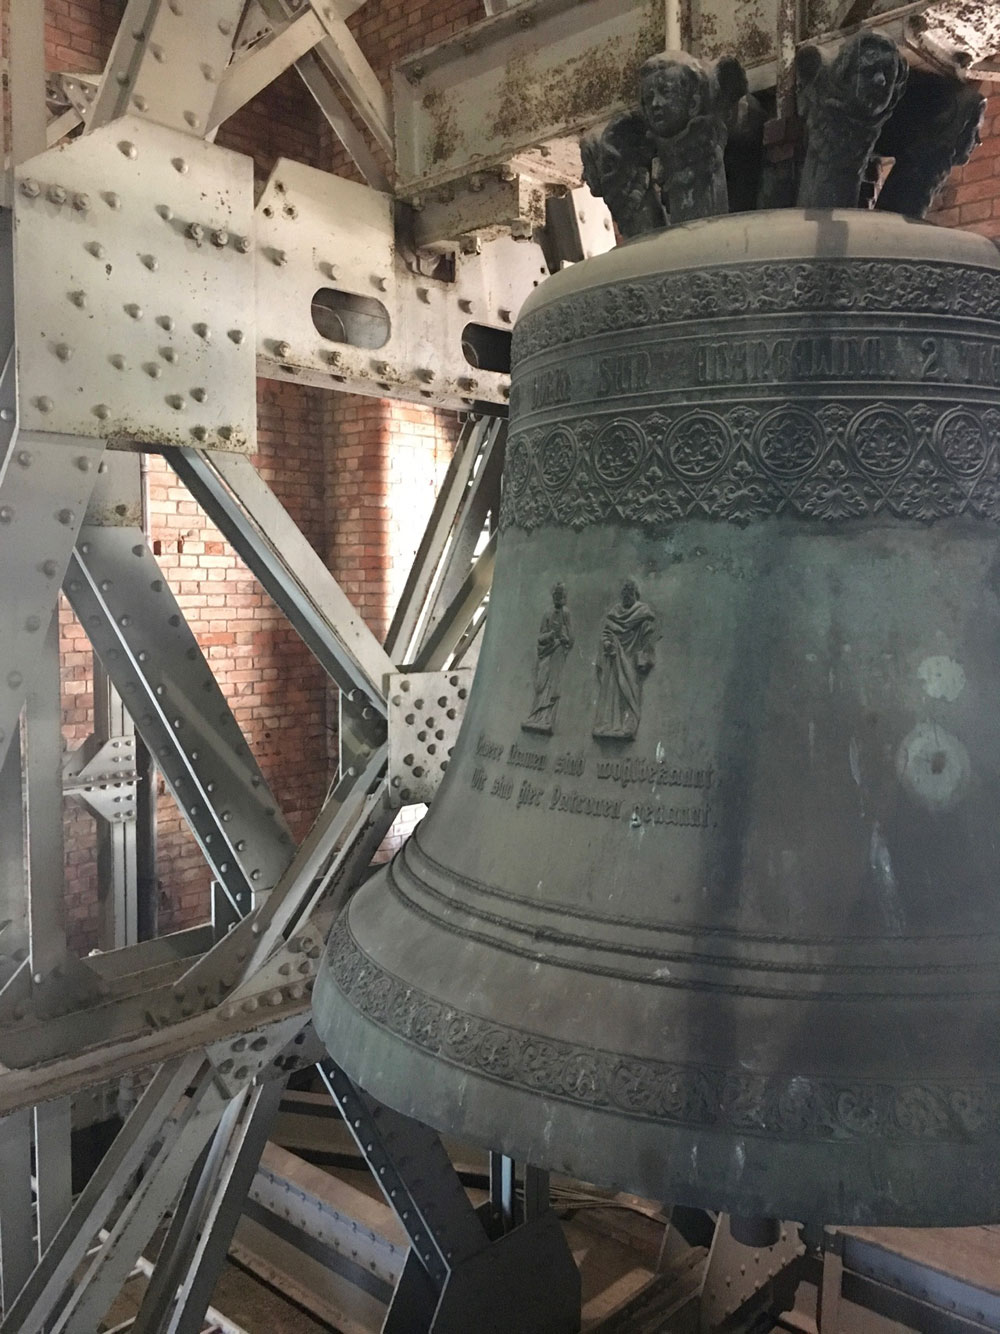 Bells in the Sankt Petri church